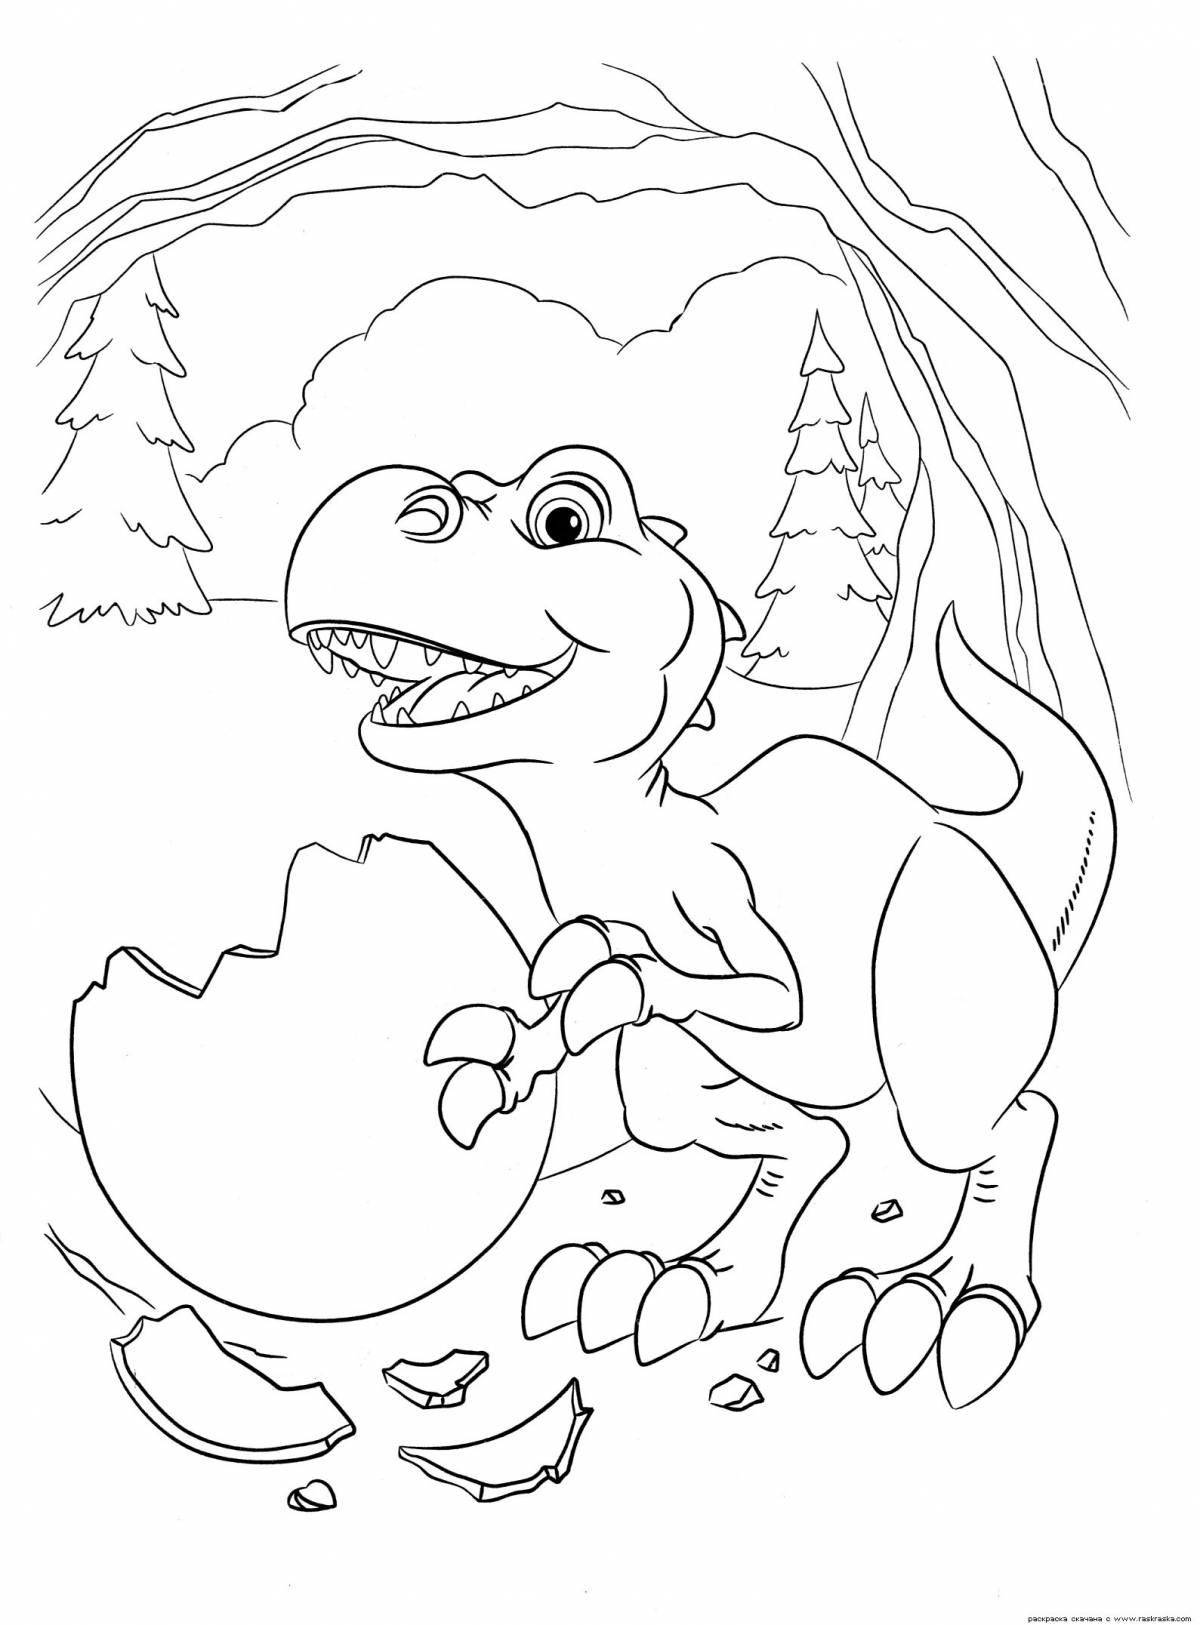 Adorable cartoon tarbosaurus coloring book